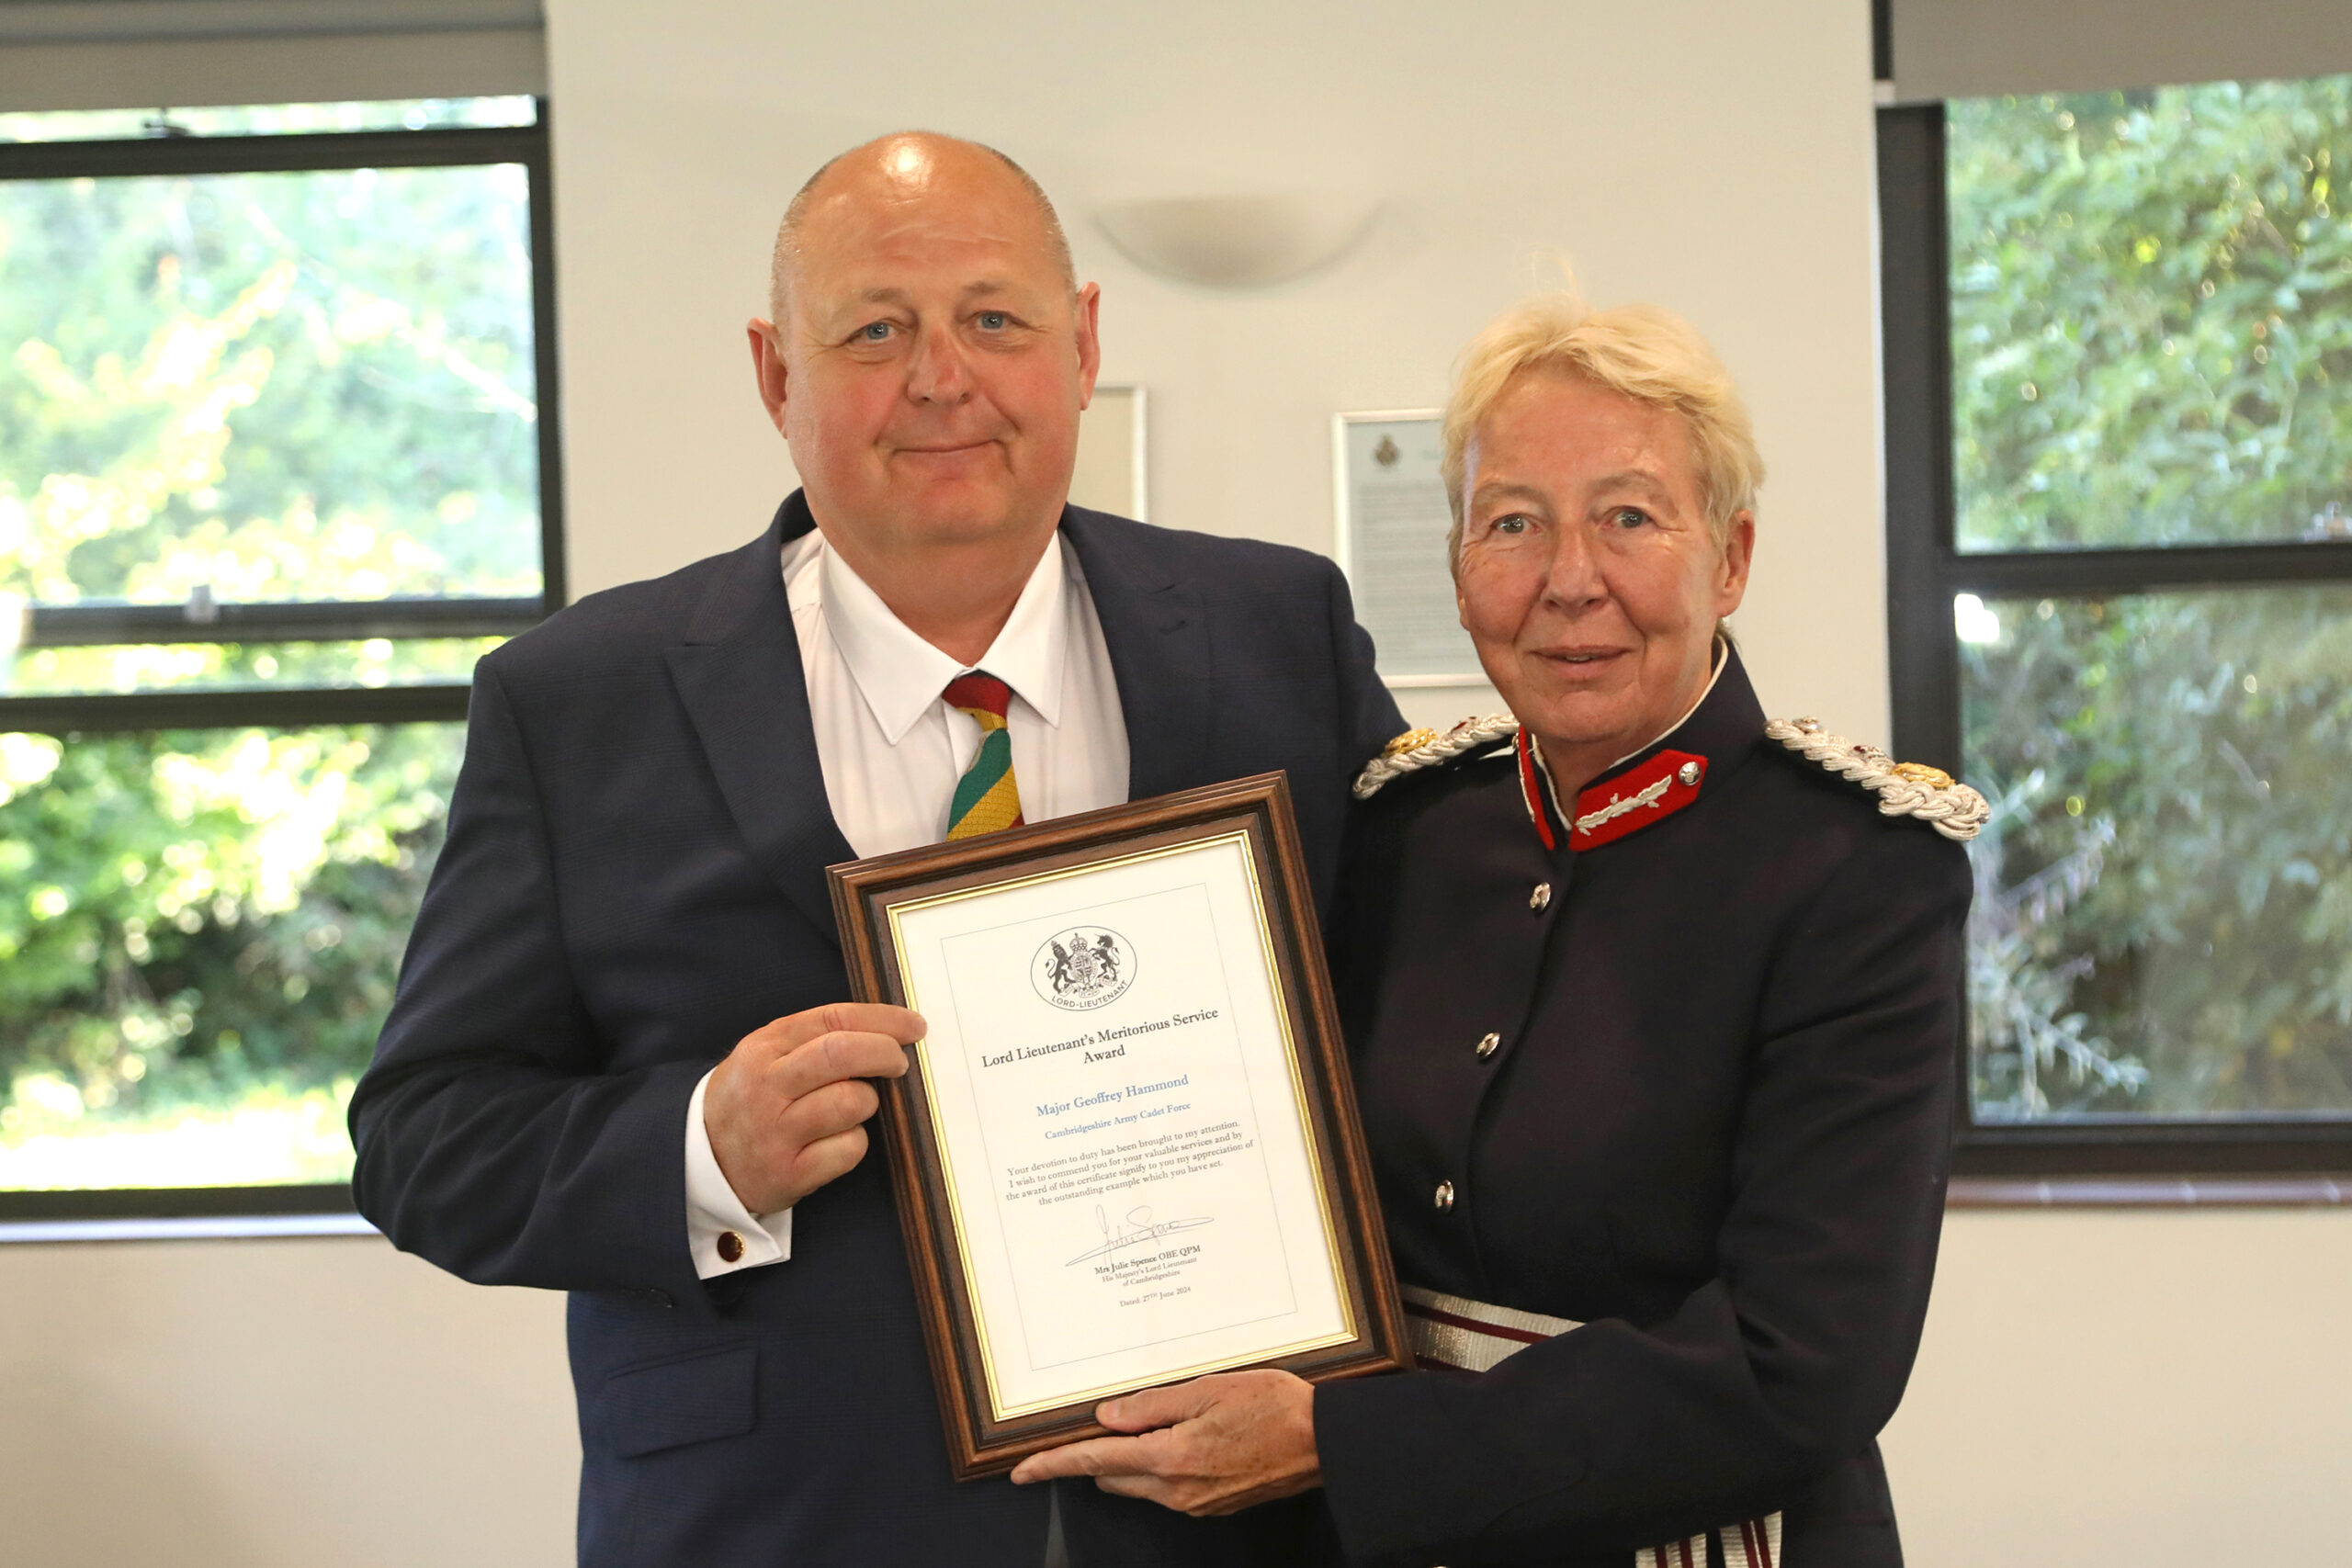 Cambs Lord lieutenant awards